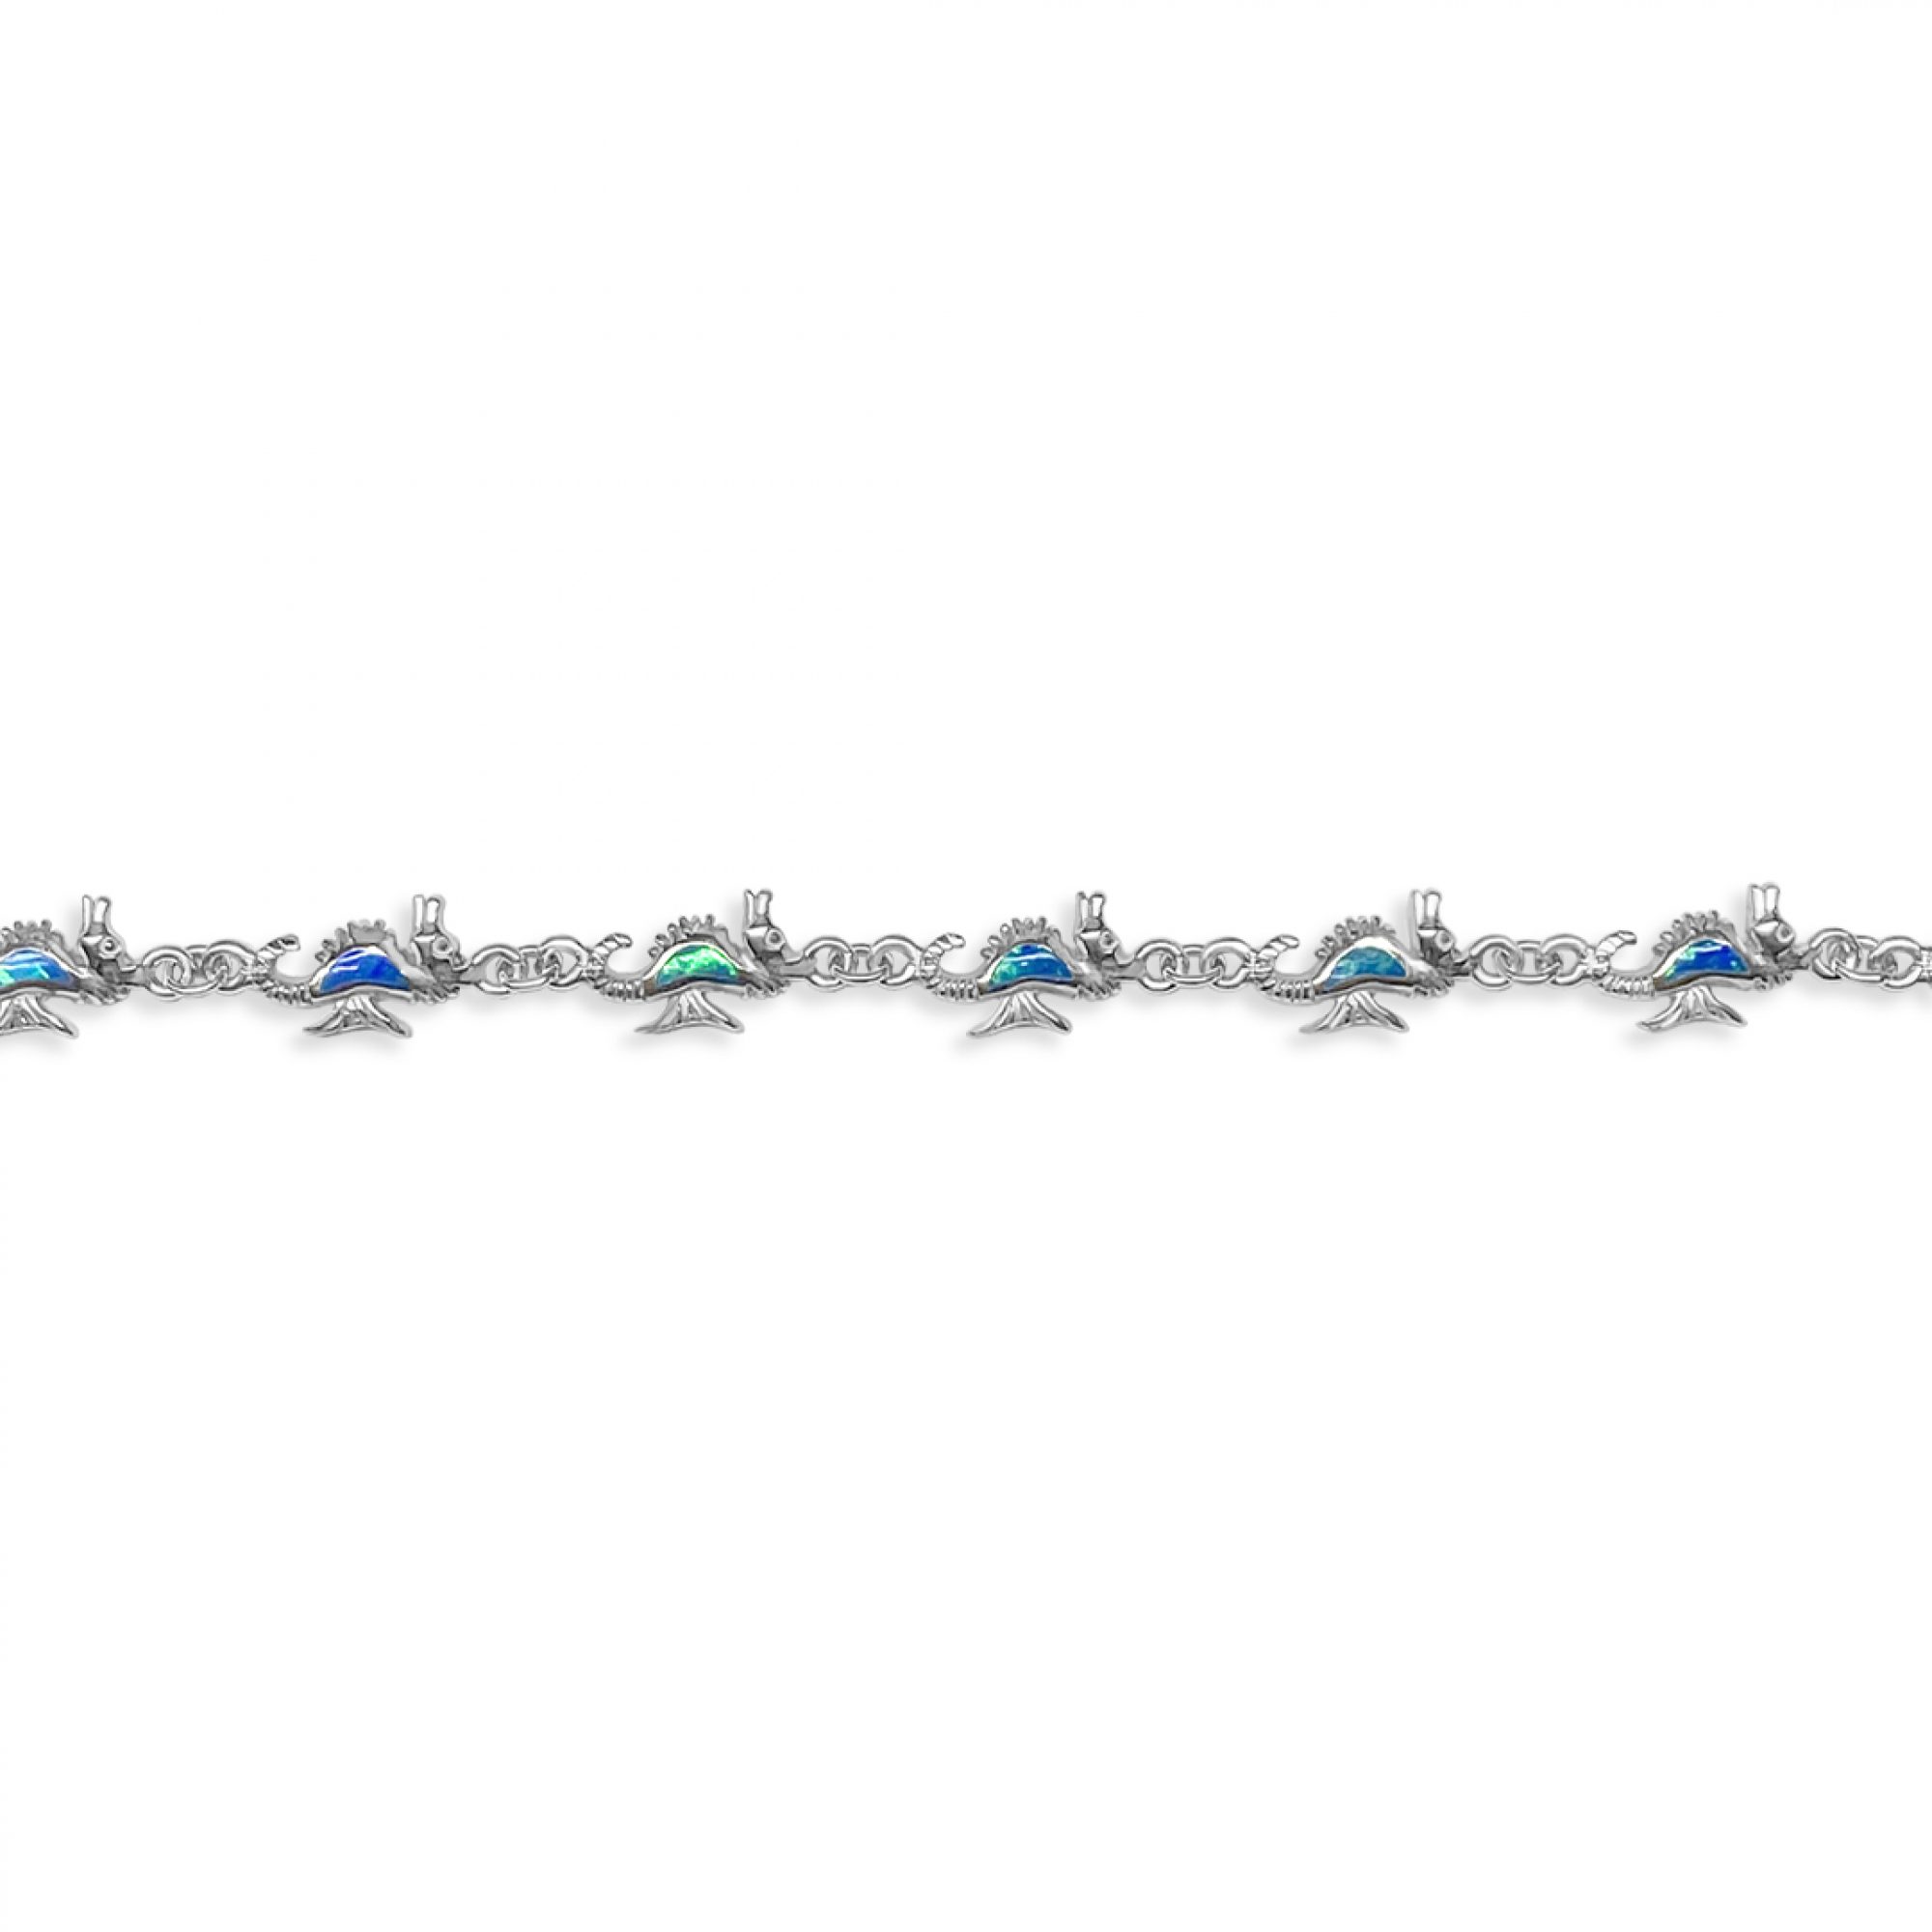 Seahorse bracelet with opal stones